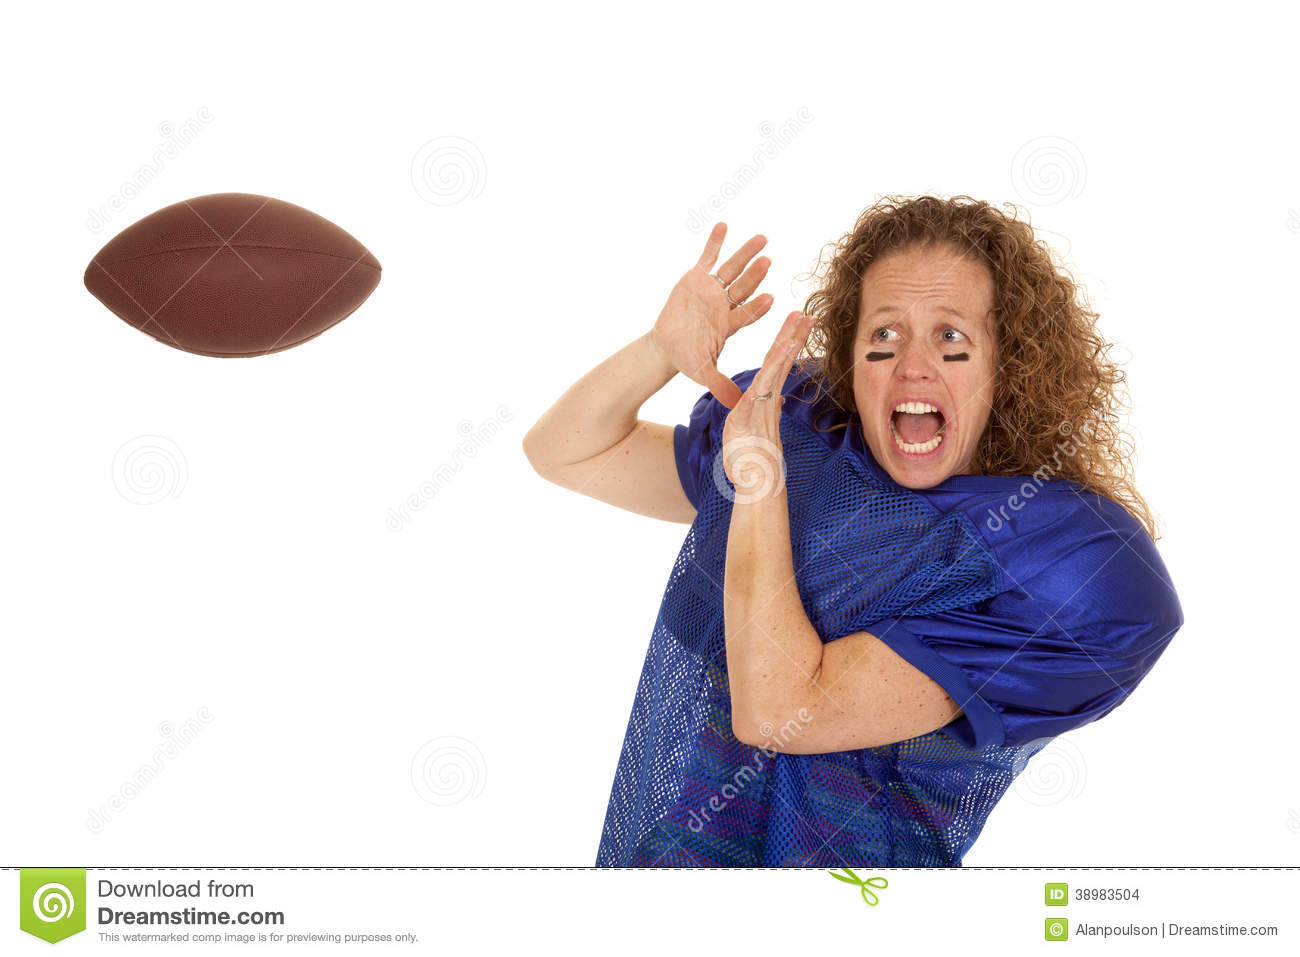 woman-football-player-afraid-to-catch-ball-mature-38983504.jpg.da9148b94c3751adad9fa3fd007d2fcd.jpg